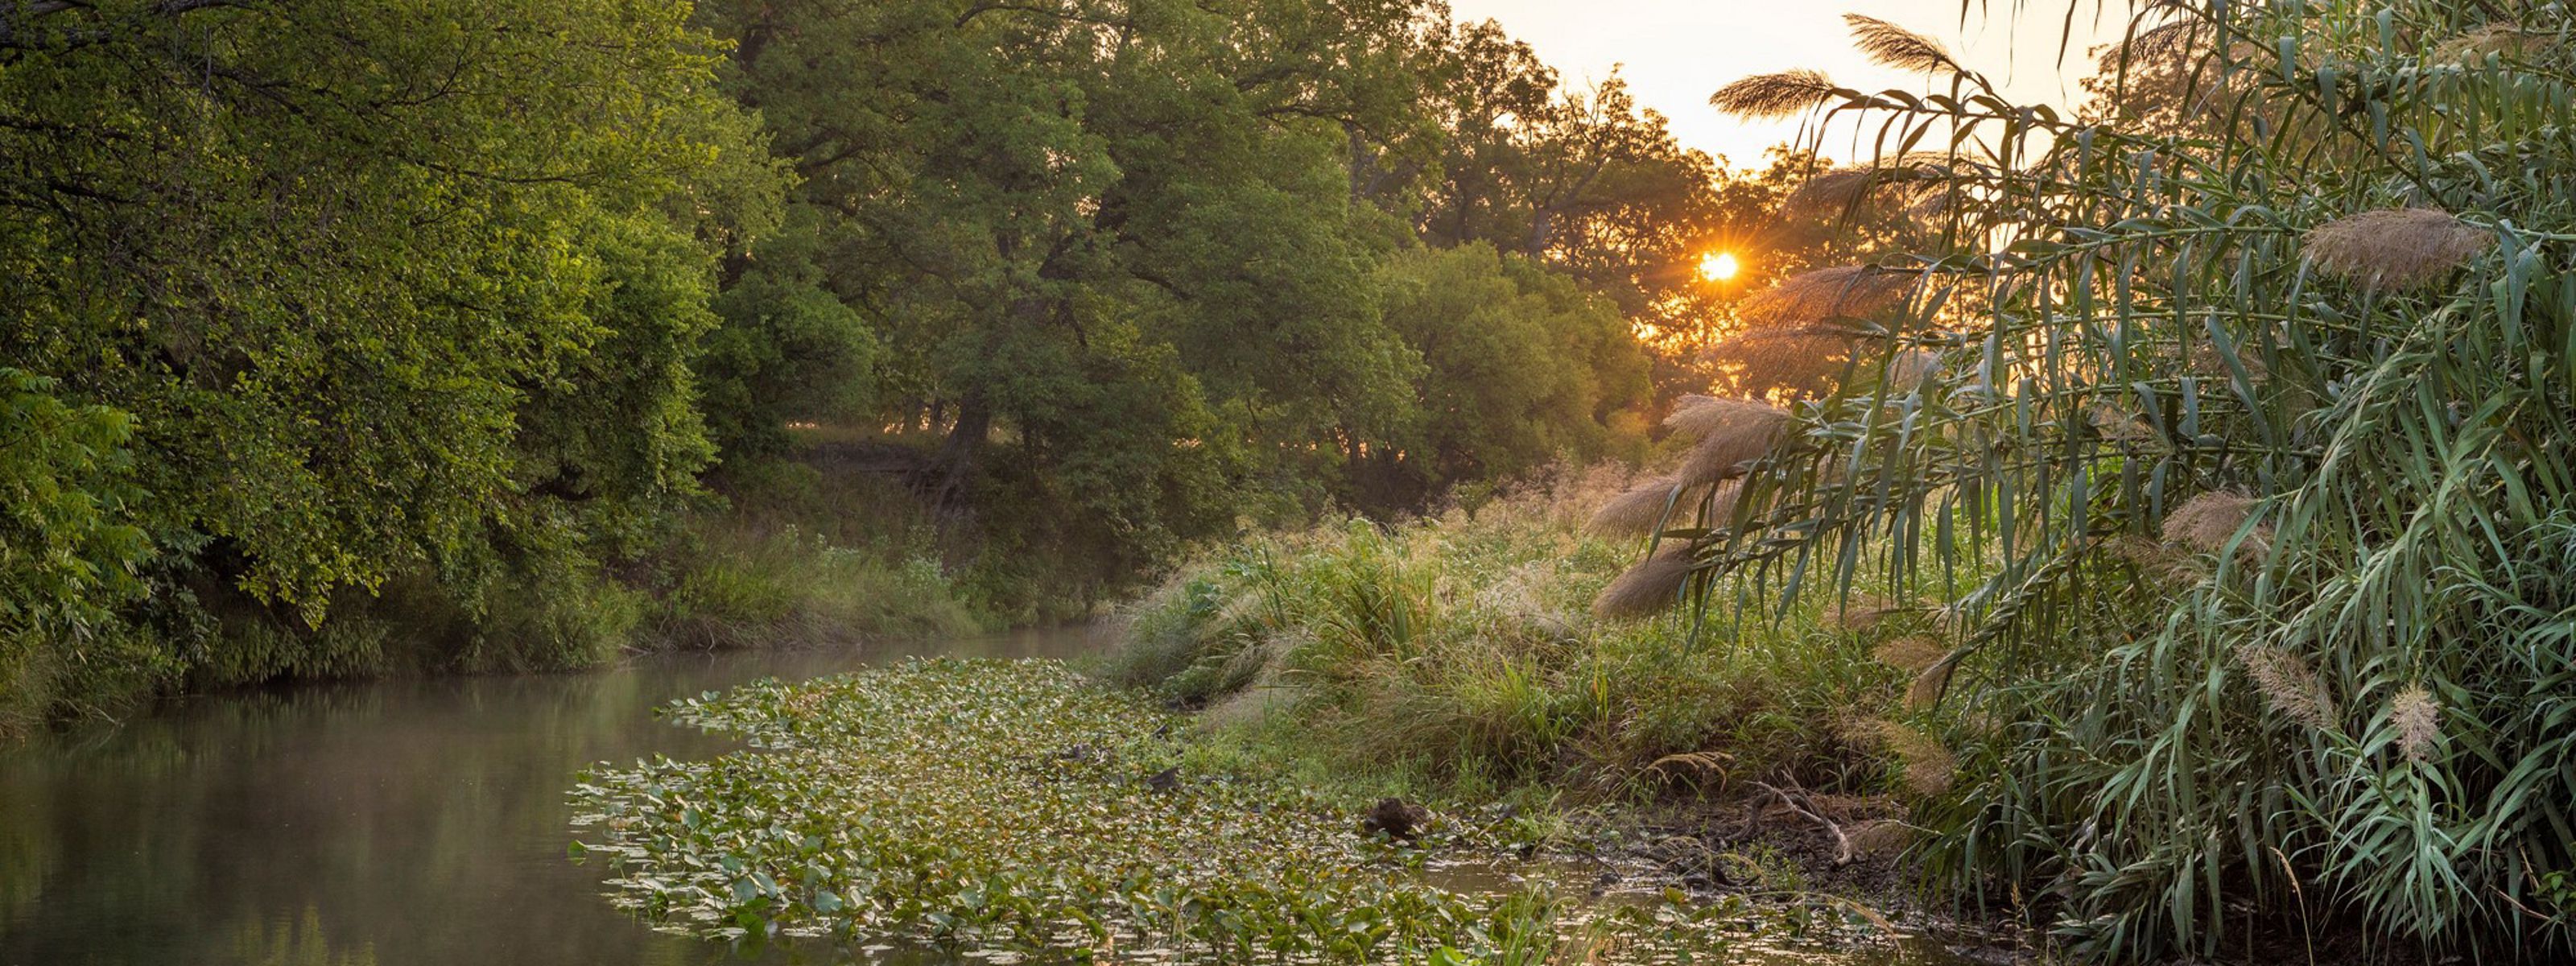 Sunrise over a river line with dense vegetation and floating plants.